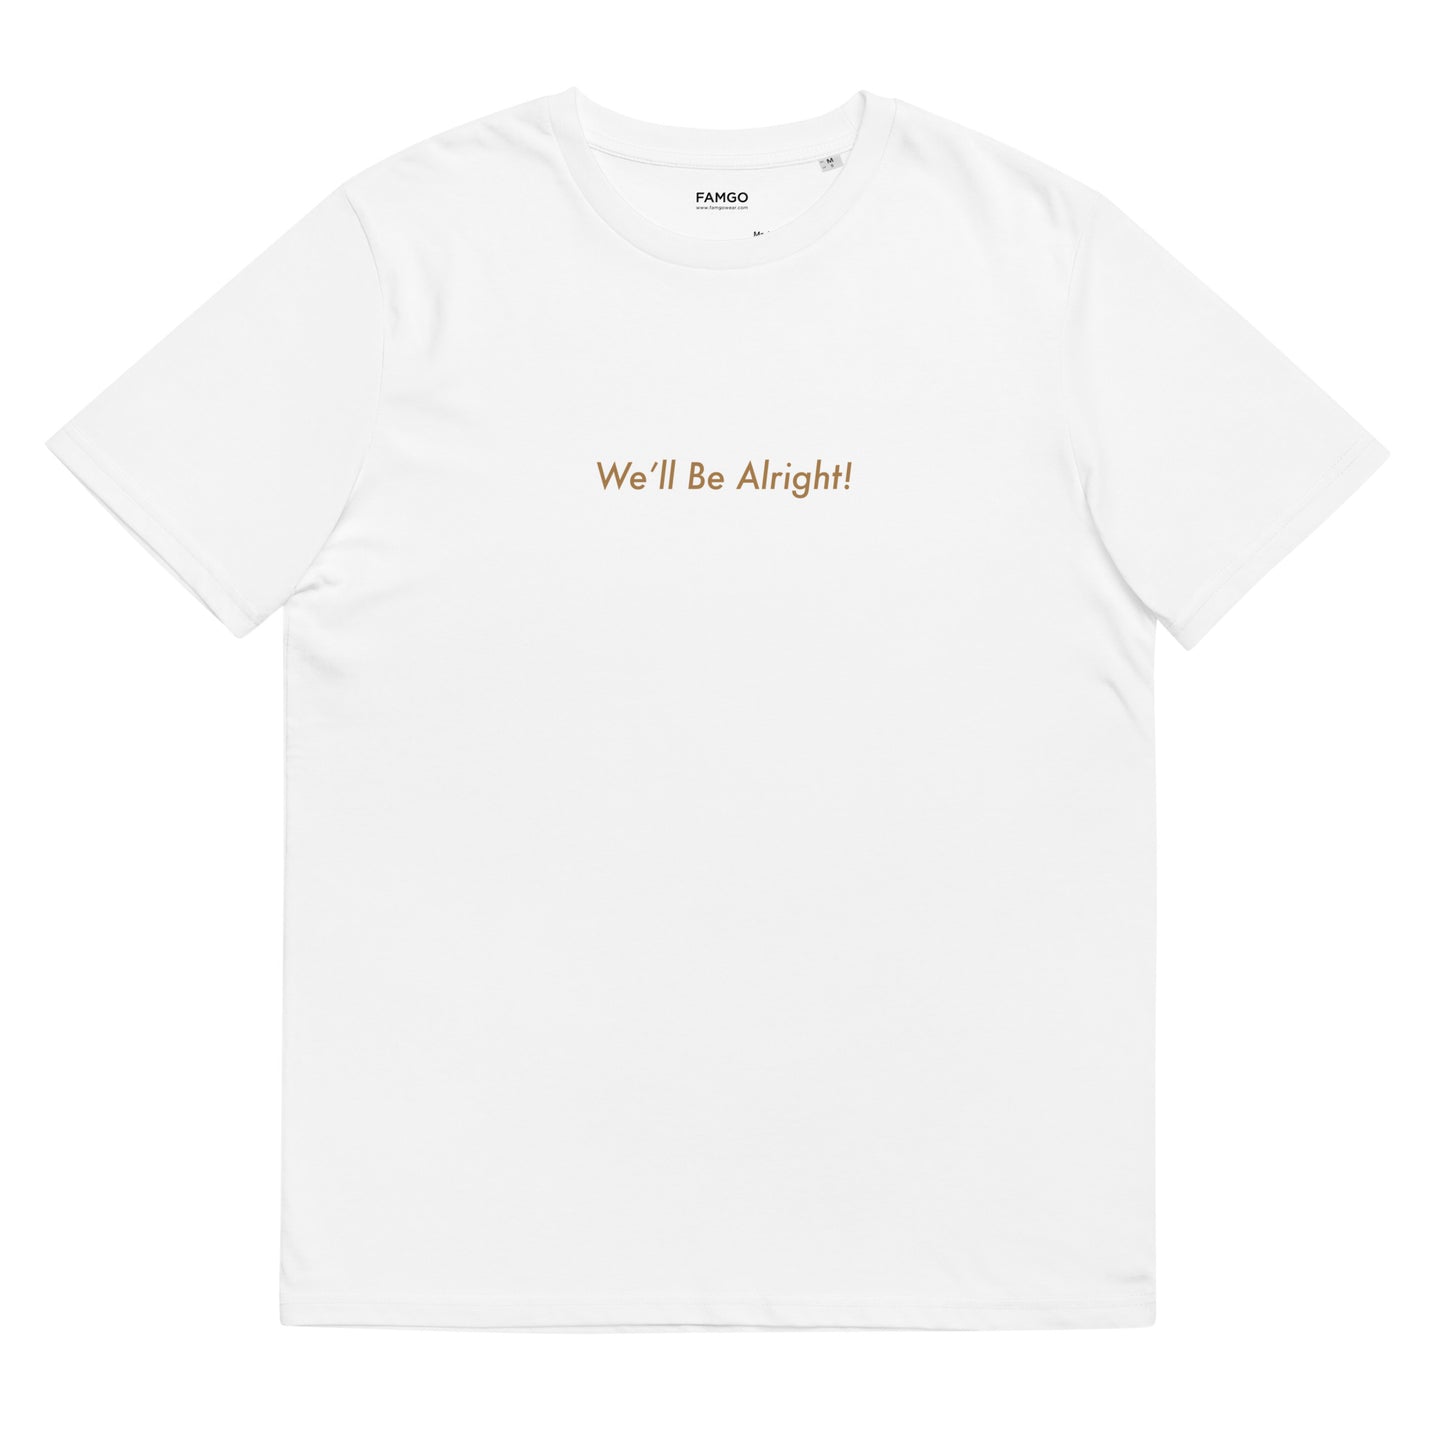 We'll Be Alright! Men's 100% Organic Cotton T-shirt